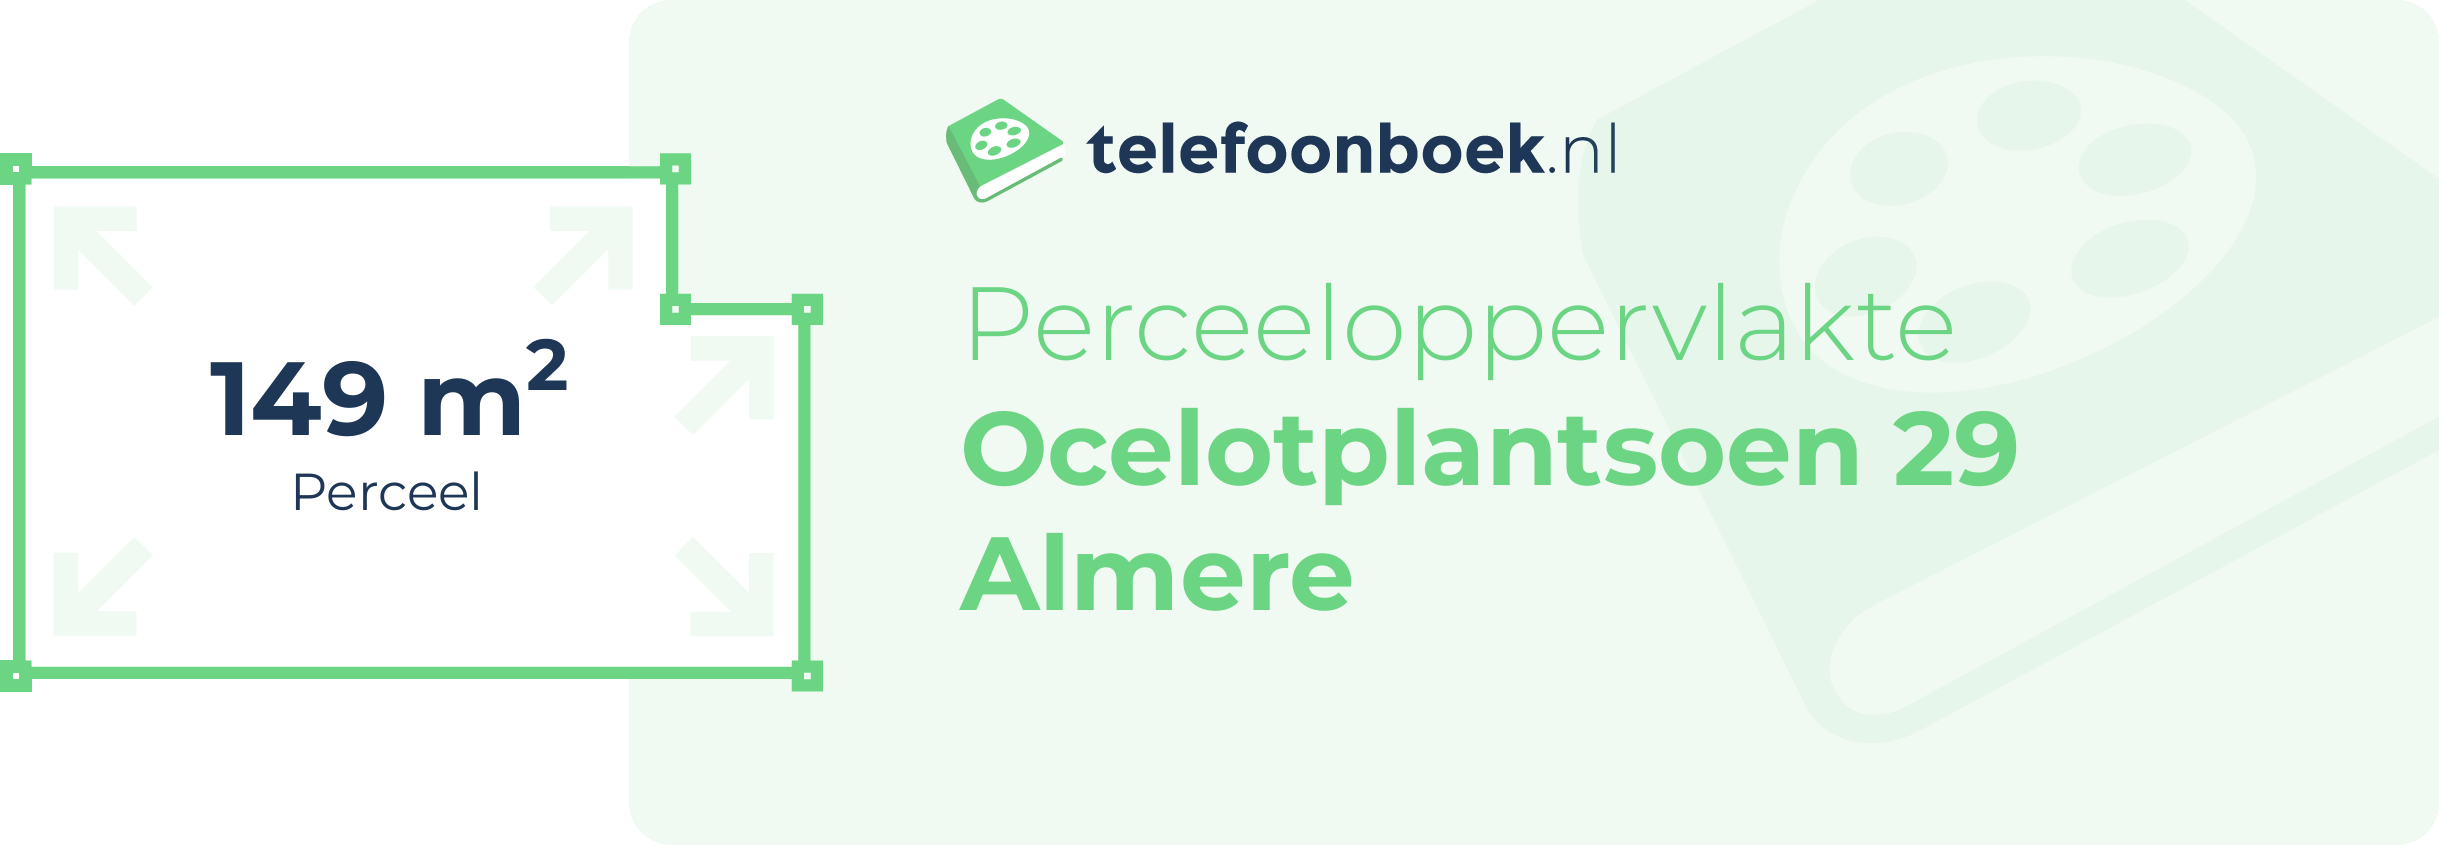 Perceeloppervlakte Ocelotplantsoen 29 Almere